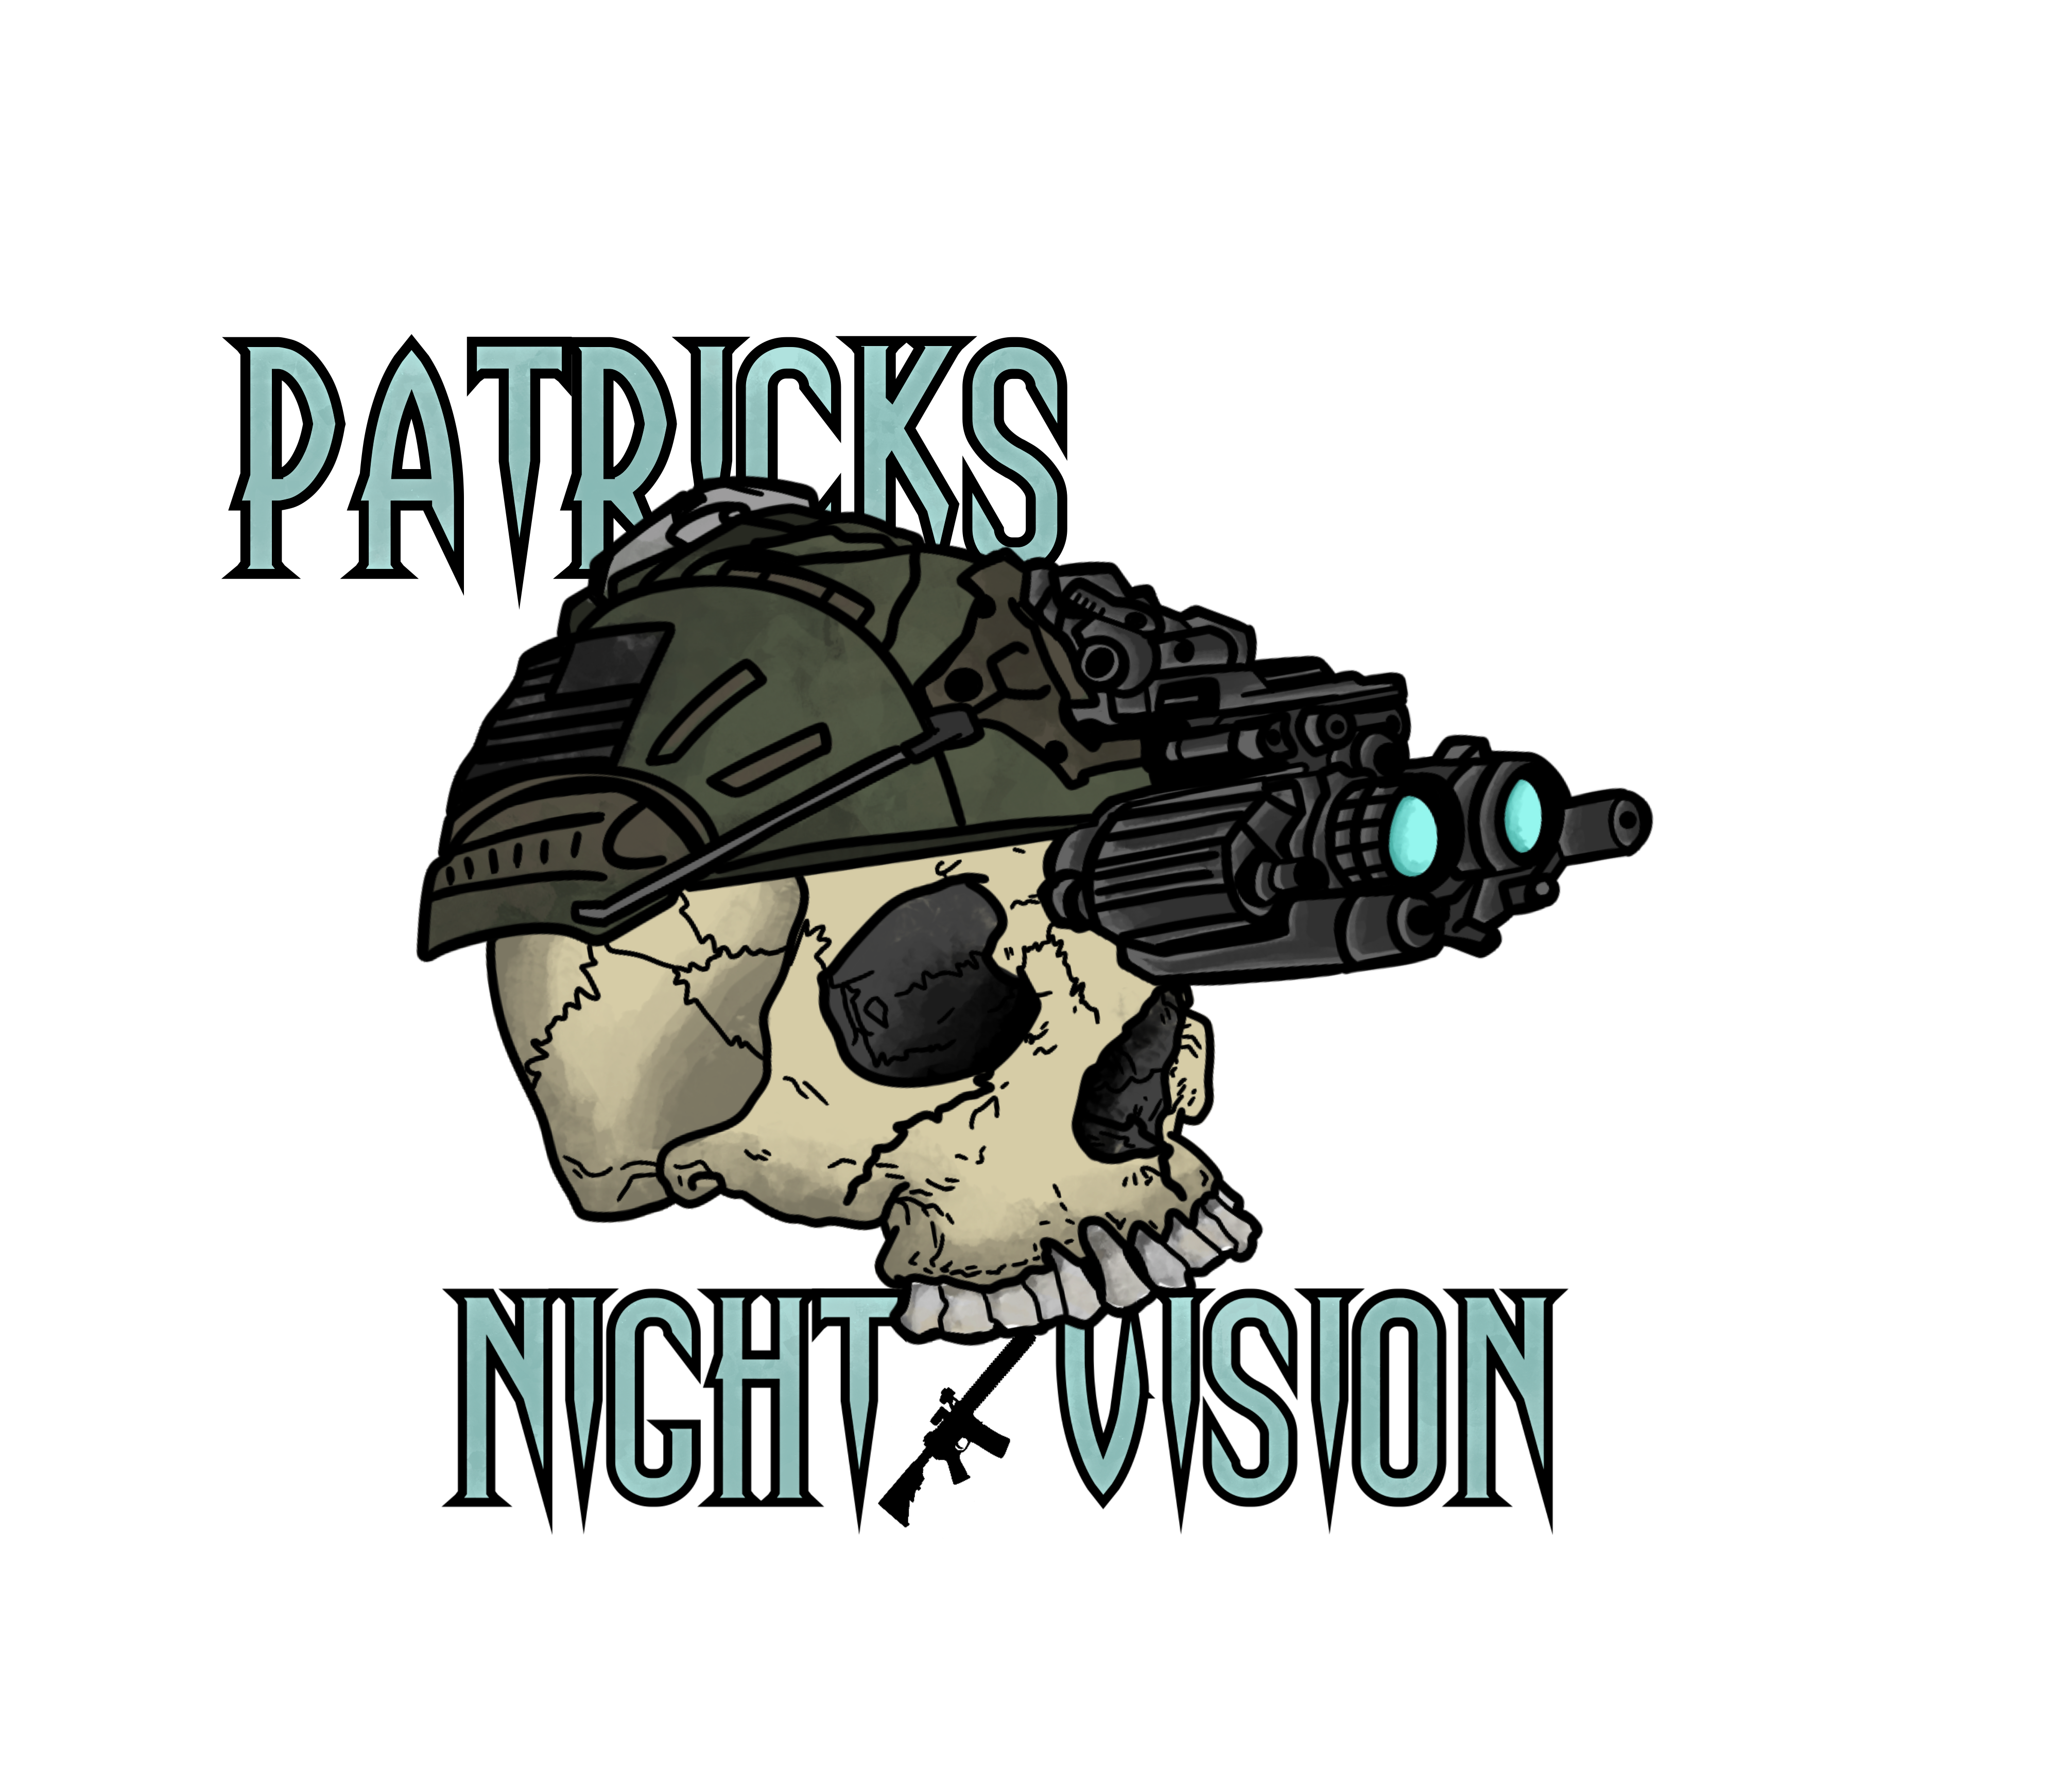 Patricks Night Vision